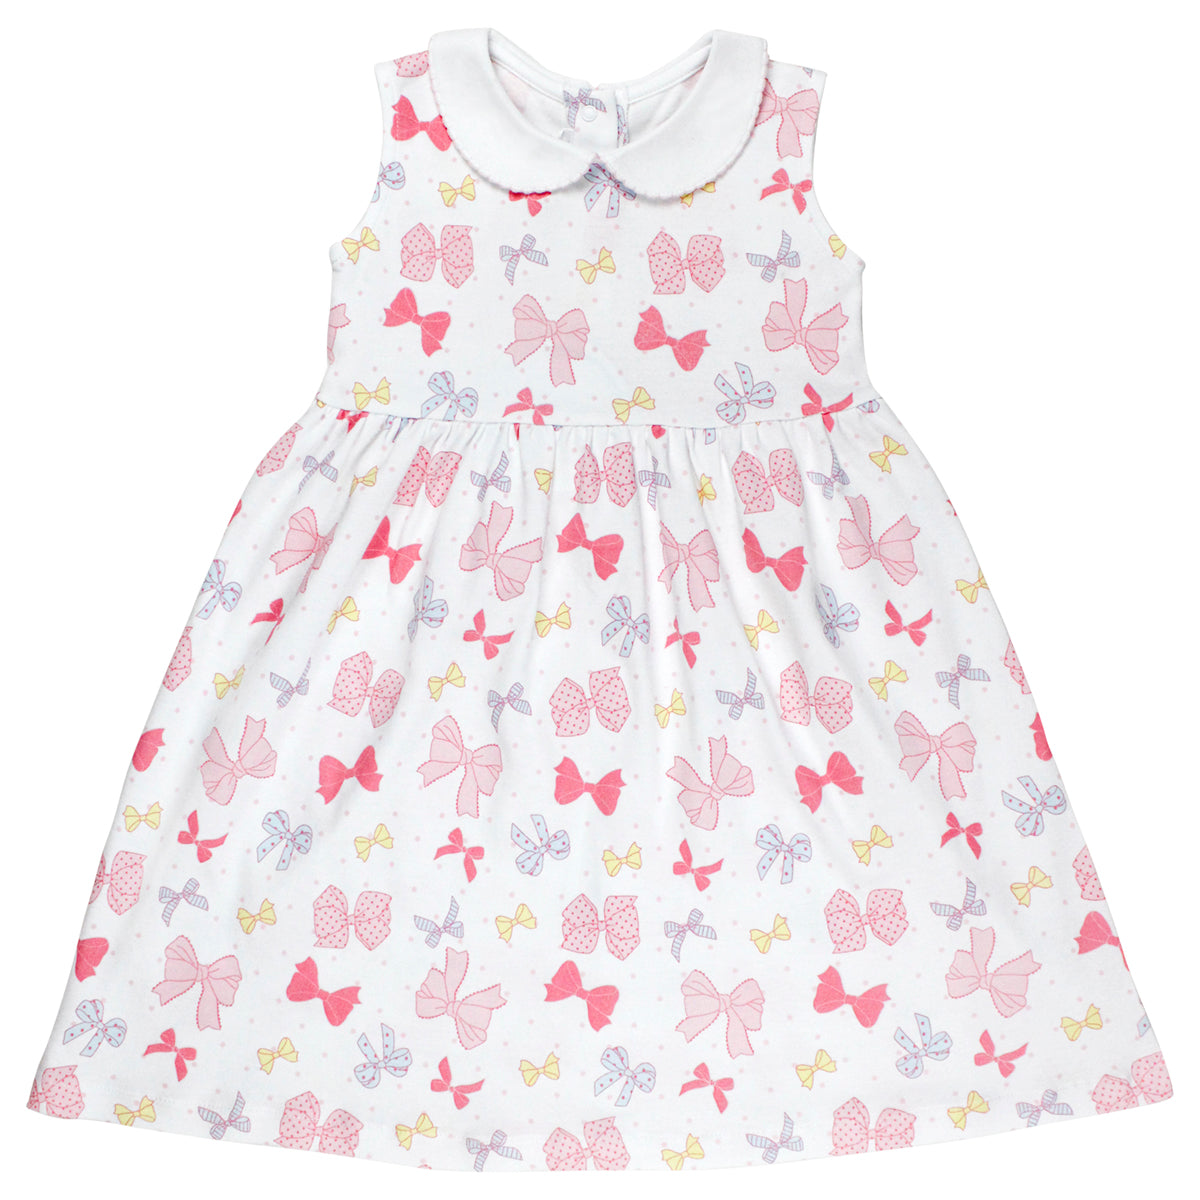 All Bows Printed Dress | Baby Girl